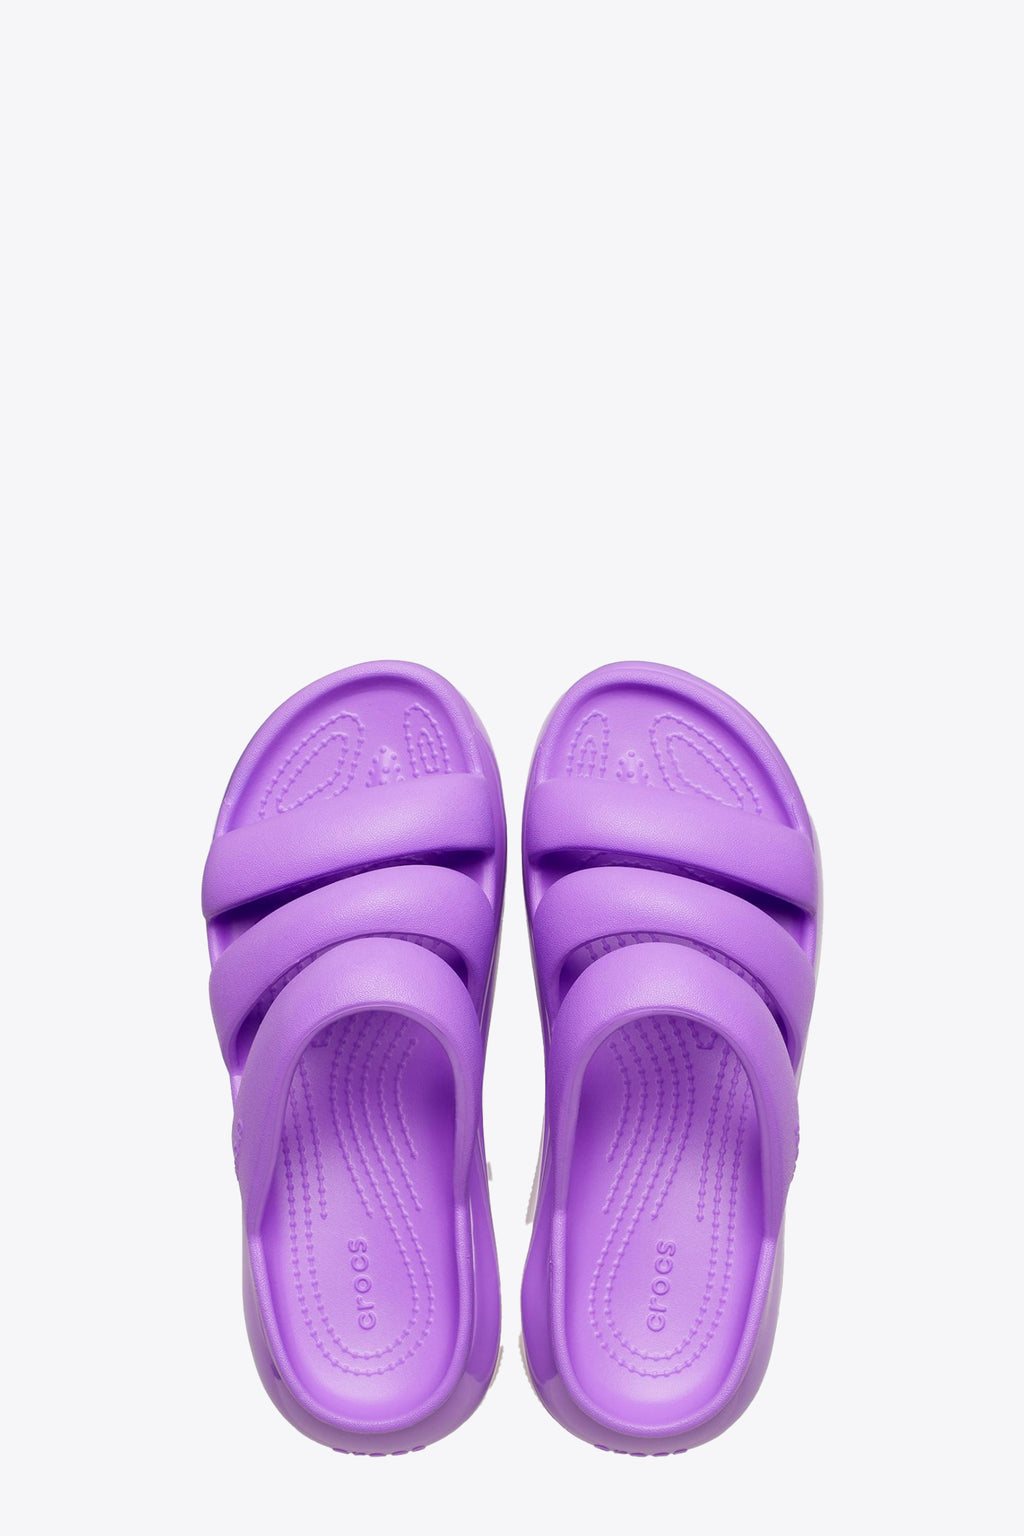 alt-image__Purple-rubber-sandal-with-wedge---Mega-Crush-Triple-Strap